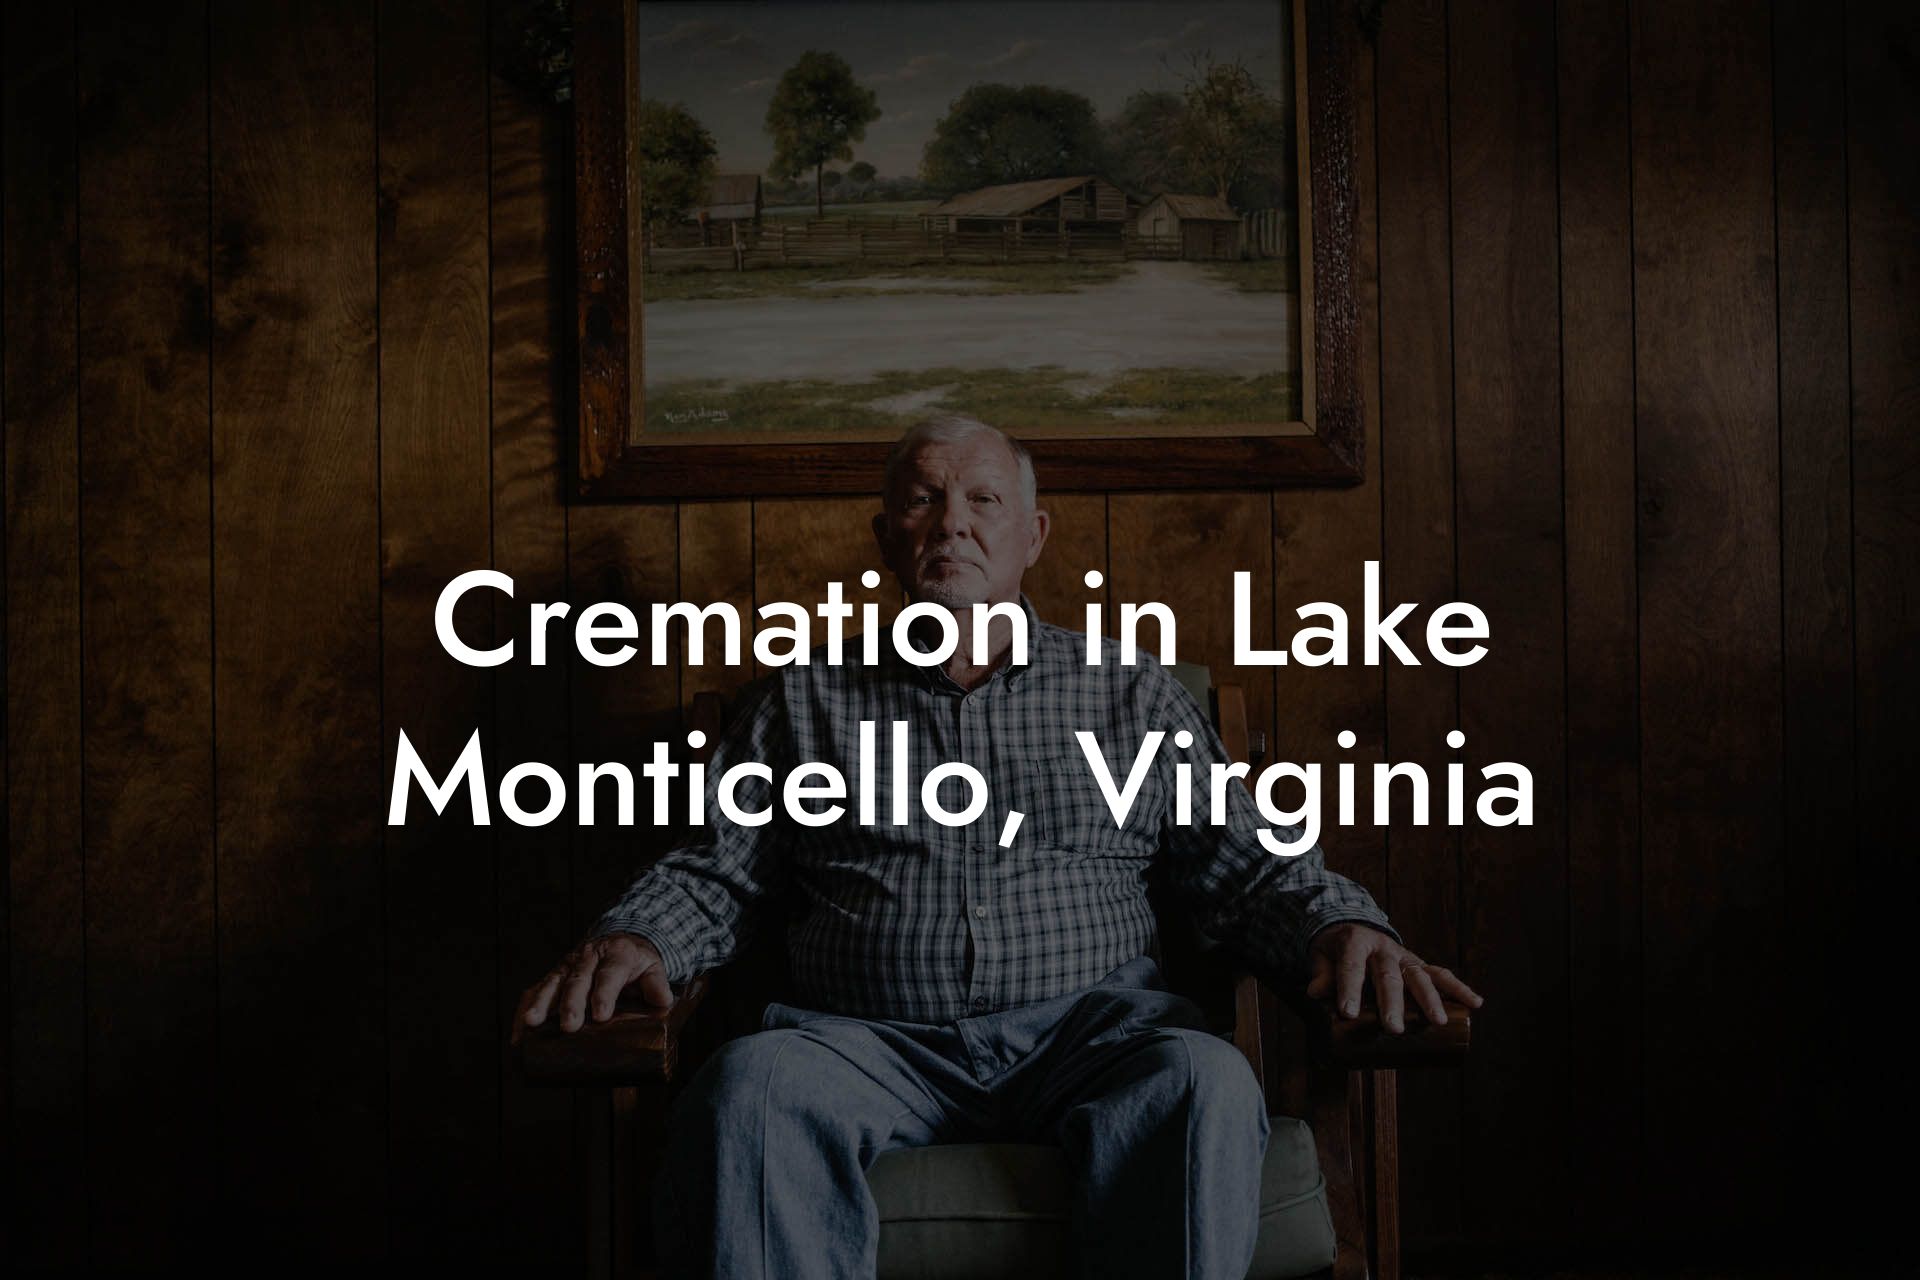 Cremation in Lake Monticello, Virginia